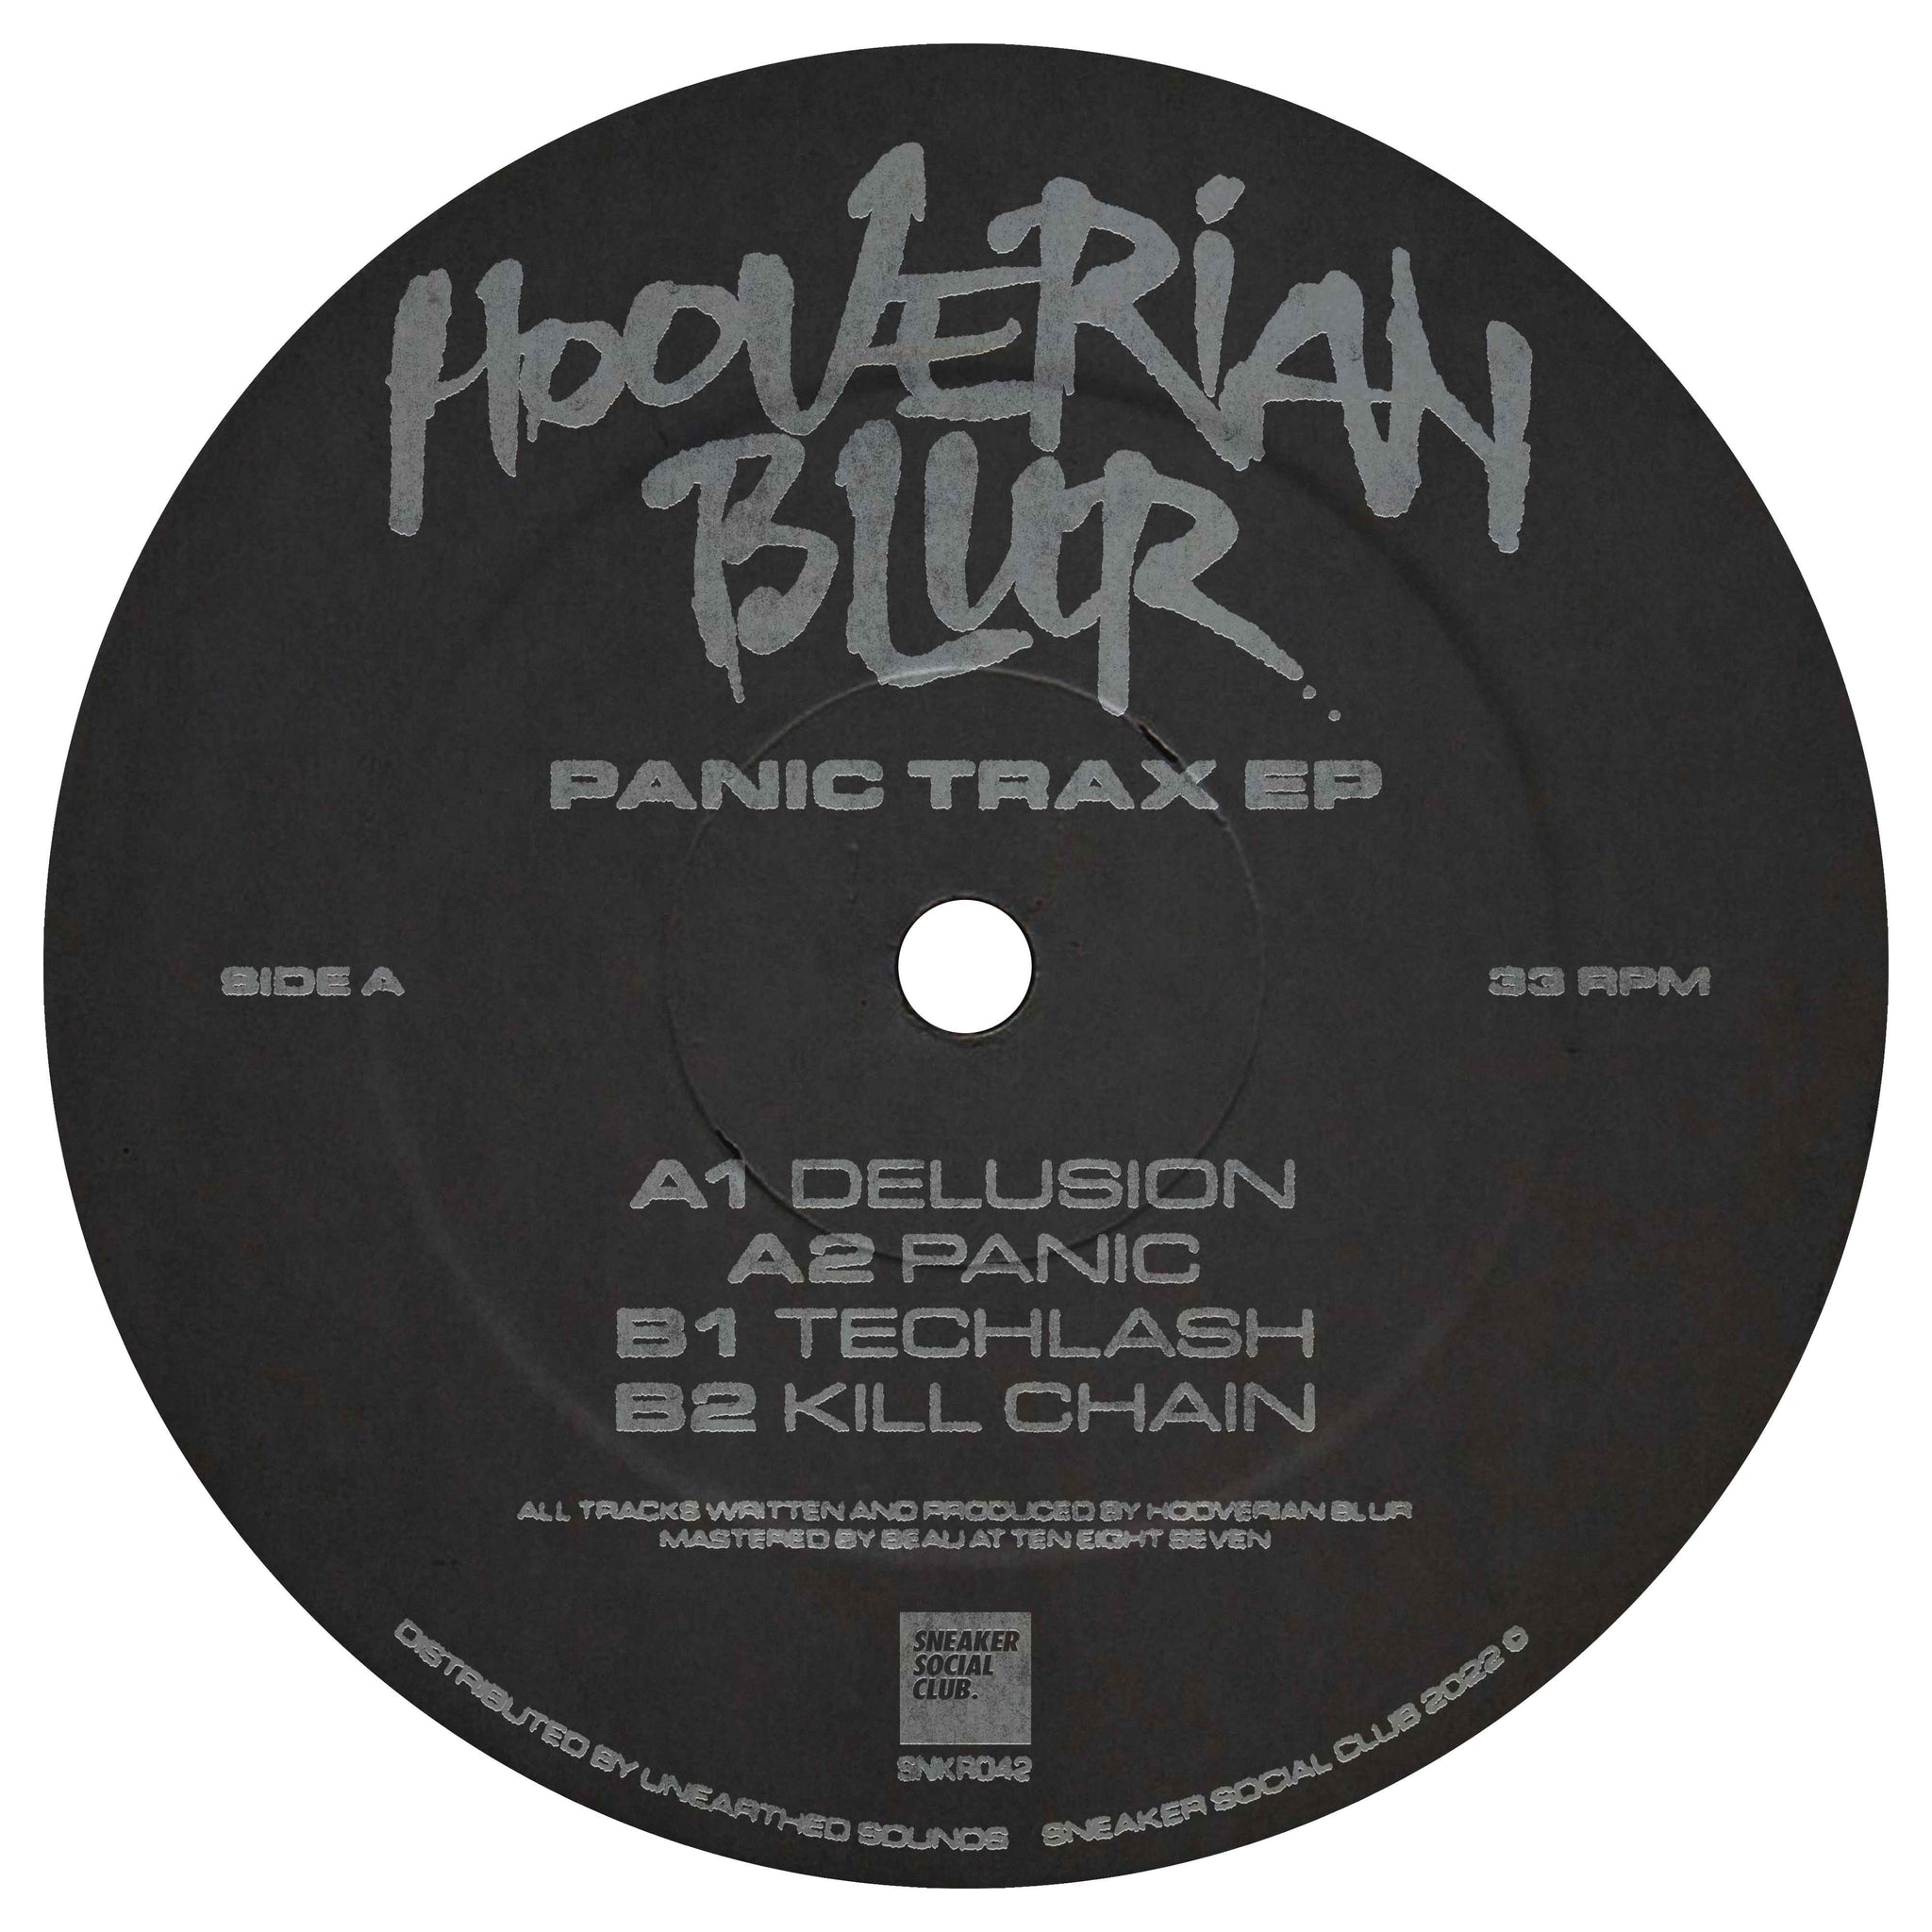 Hooverian Blur - Panic Trax EP